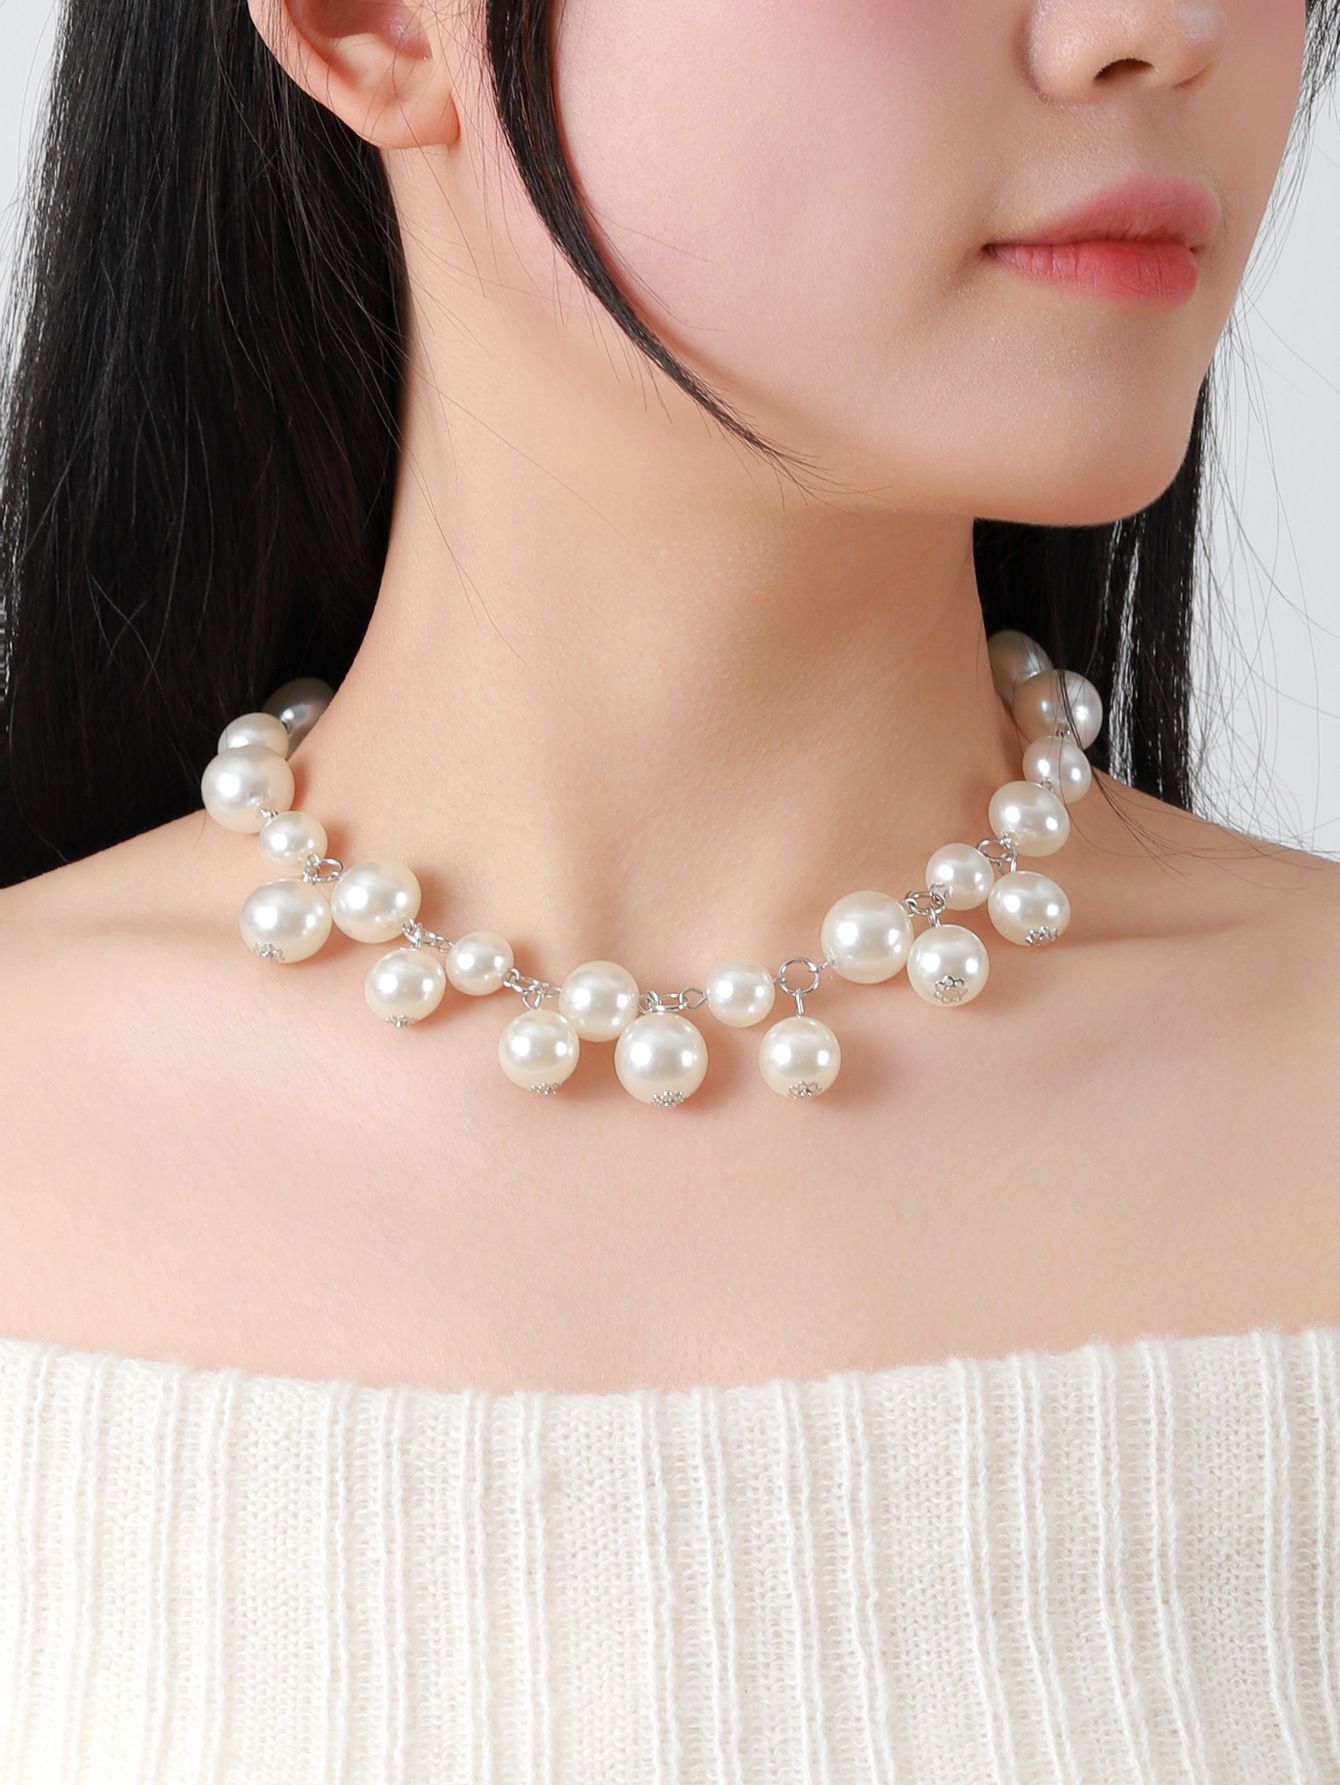 Imitation Style de perle blanc